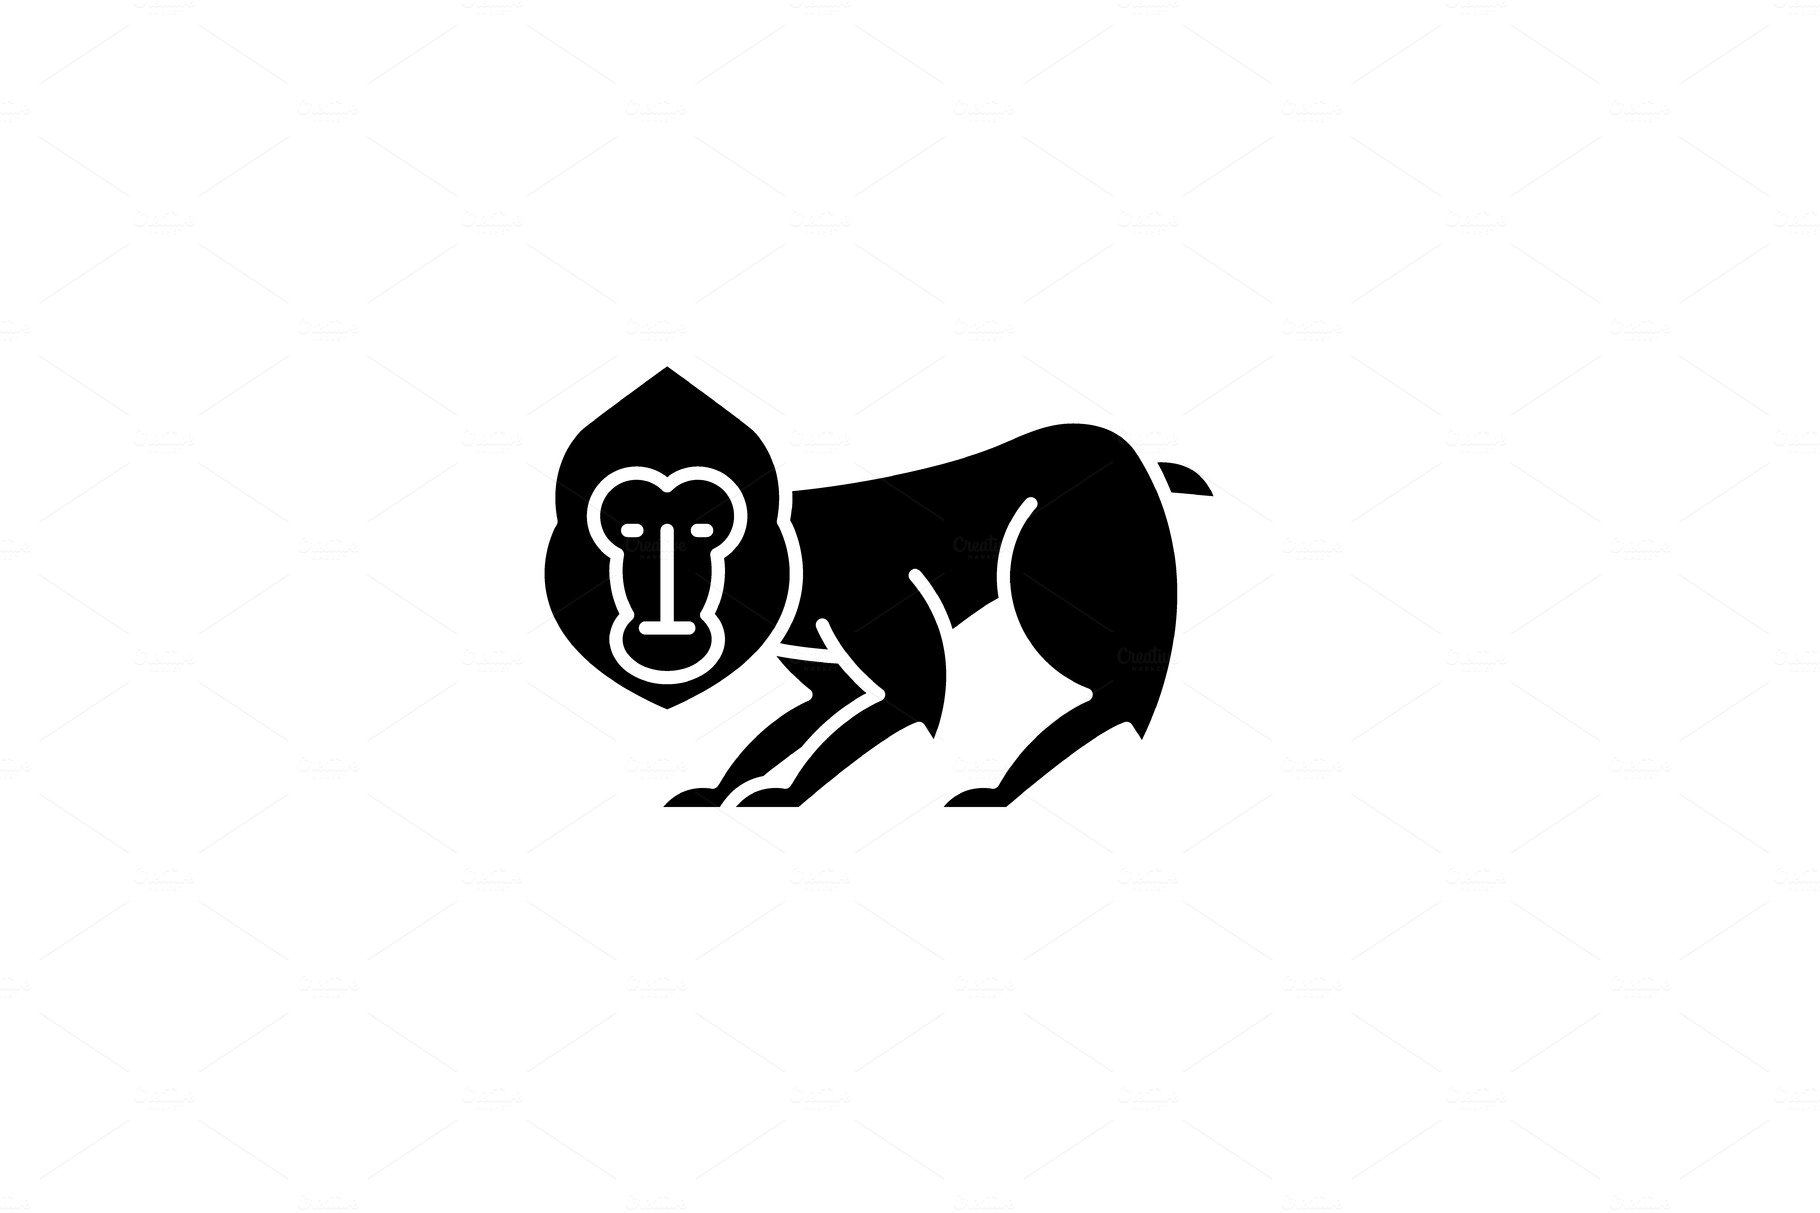 Chimpanzee black icon, vector sign cover image.